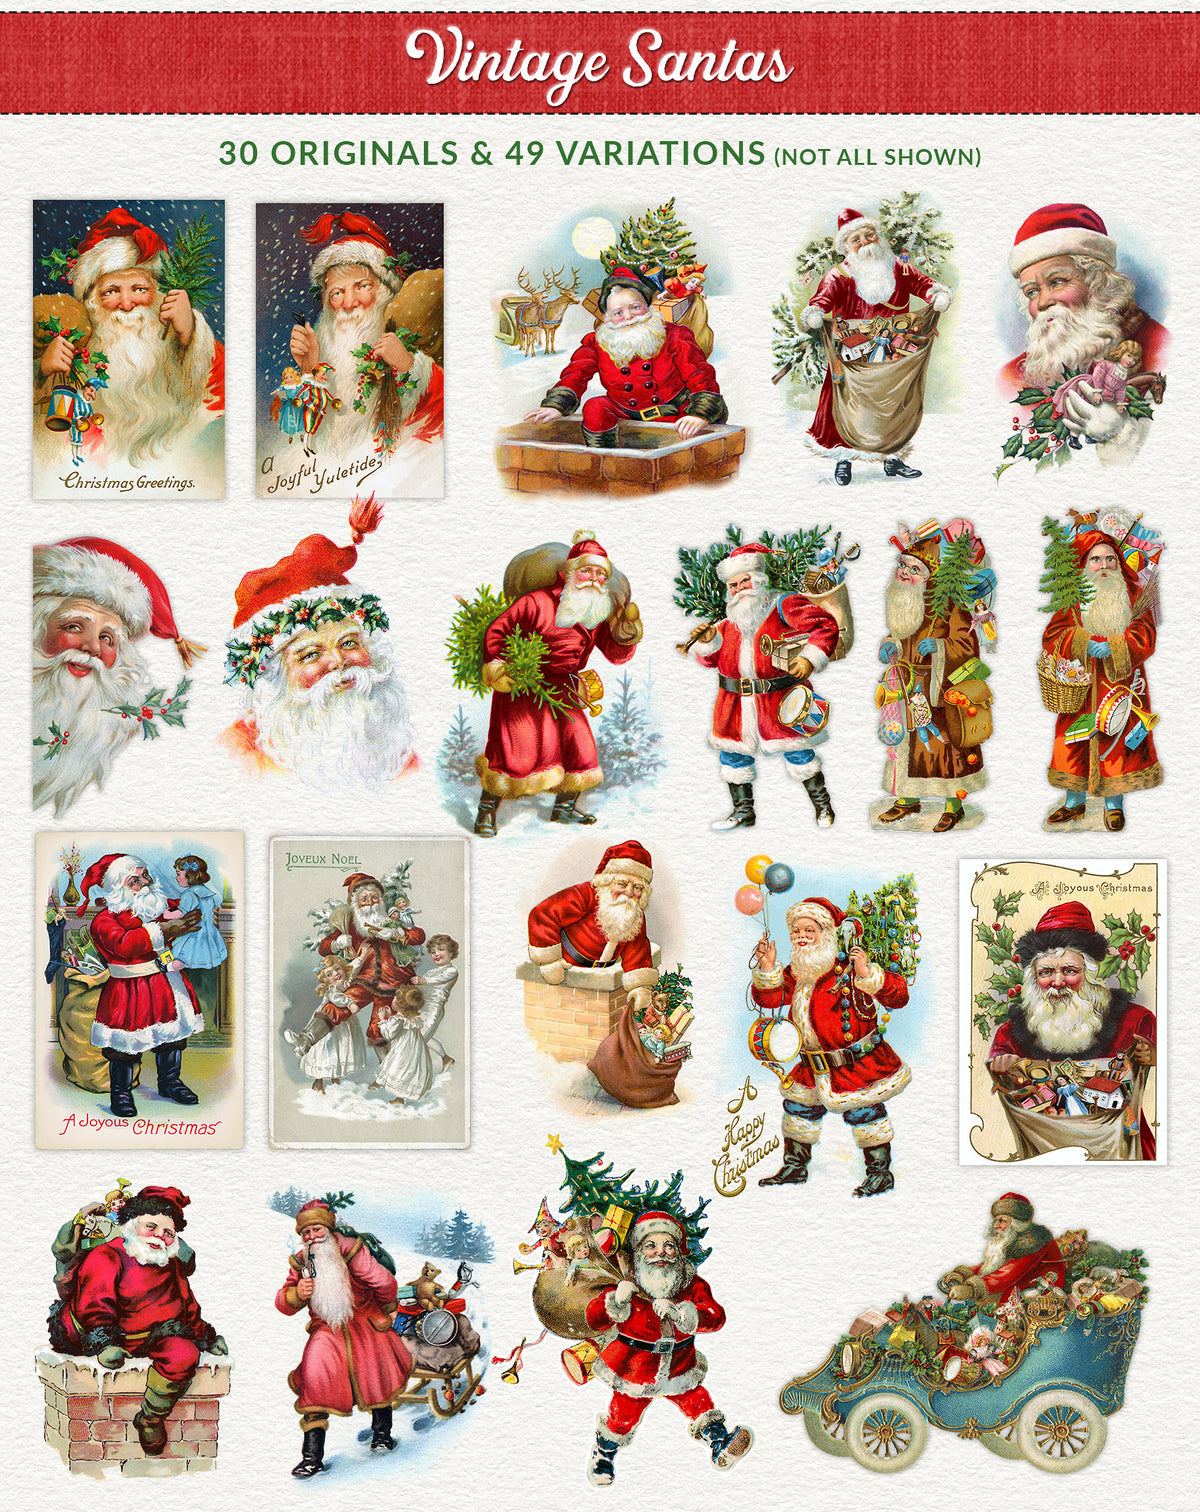 Extended License Digital Vintage Santa Illustrations from the Vintage Christmas Compendium digital collection.